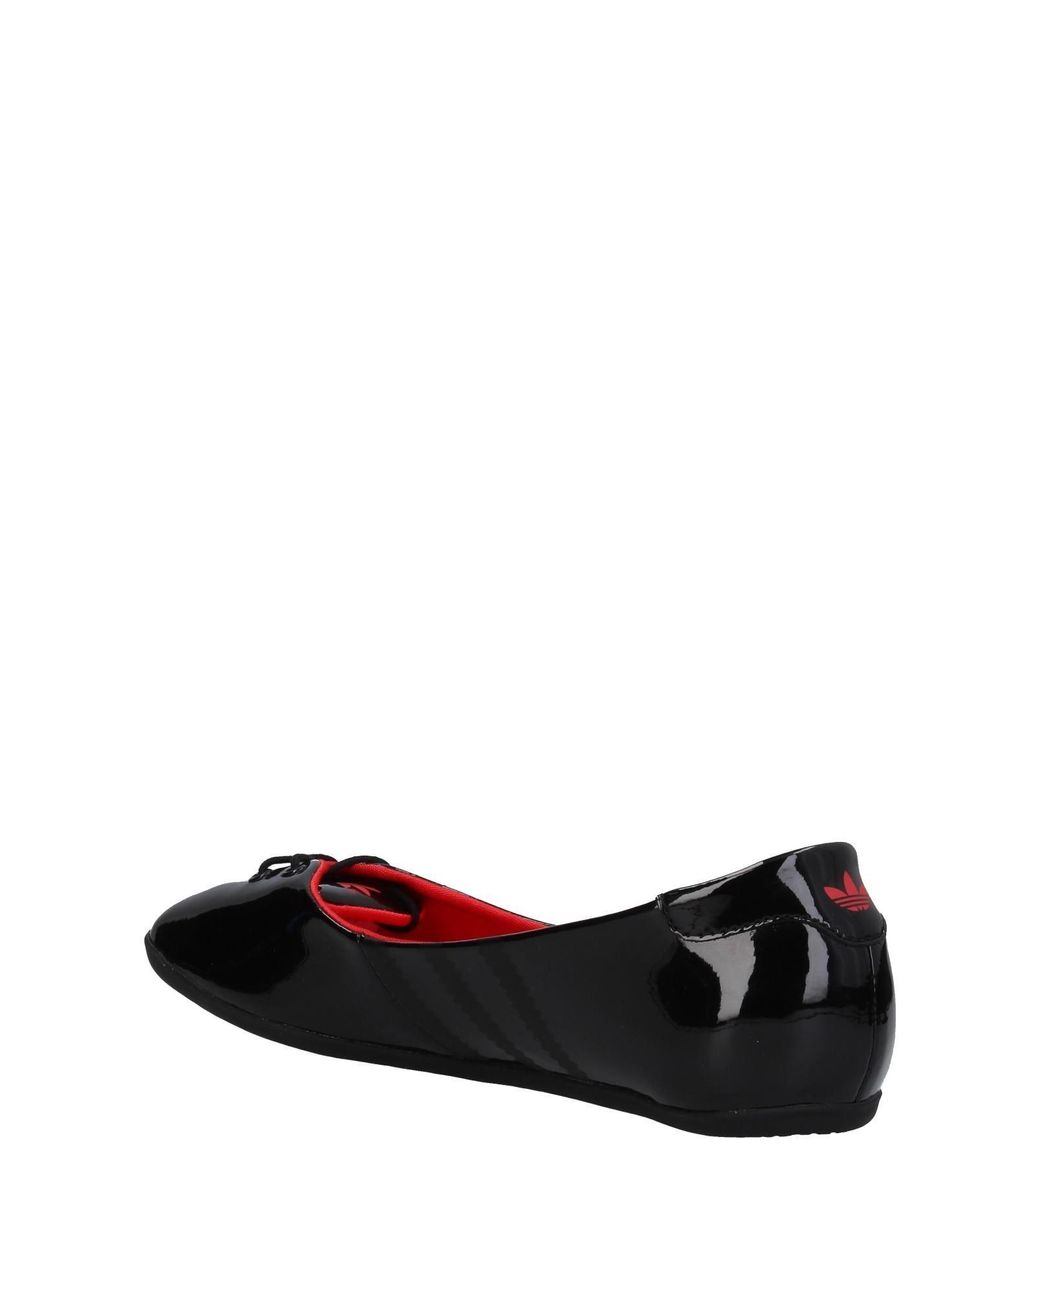 adidas Originals Leather Ballet Flats in Black | Lyst